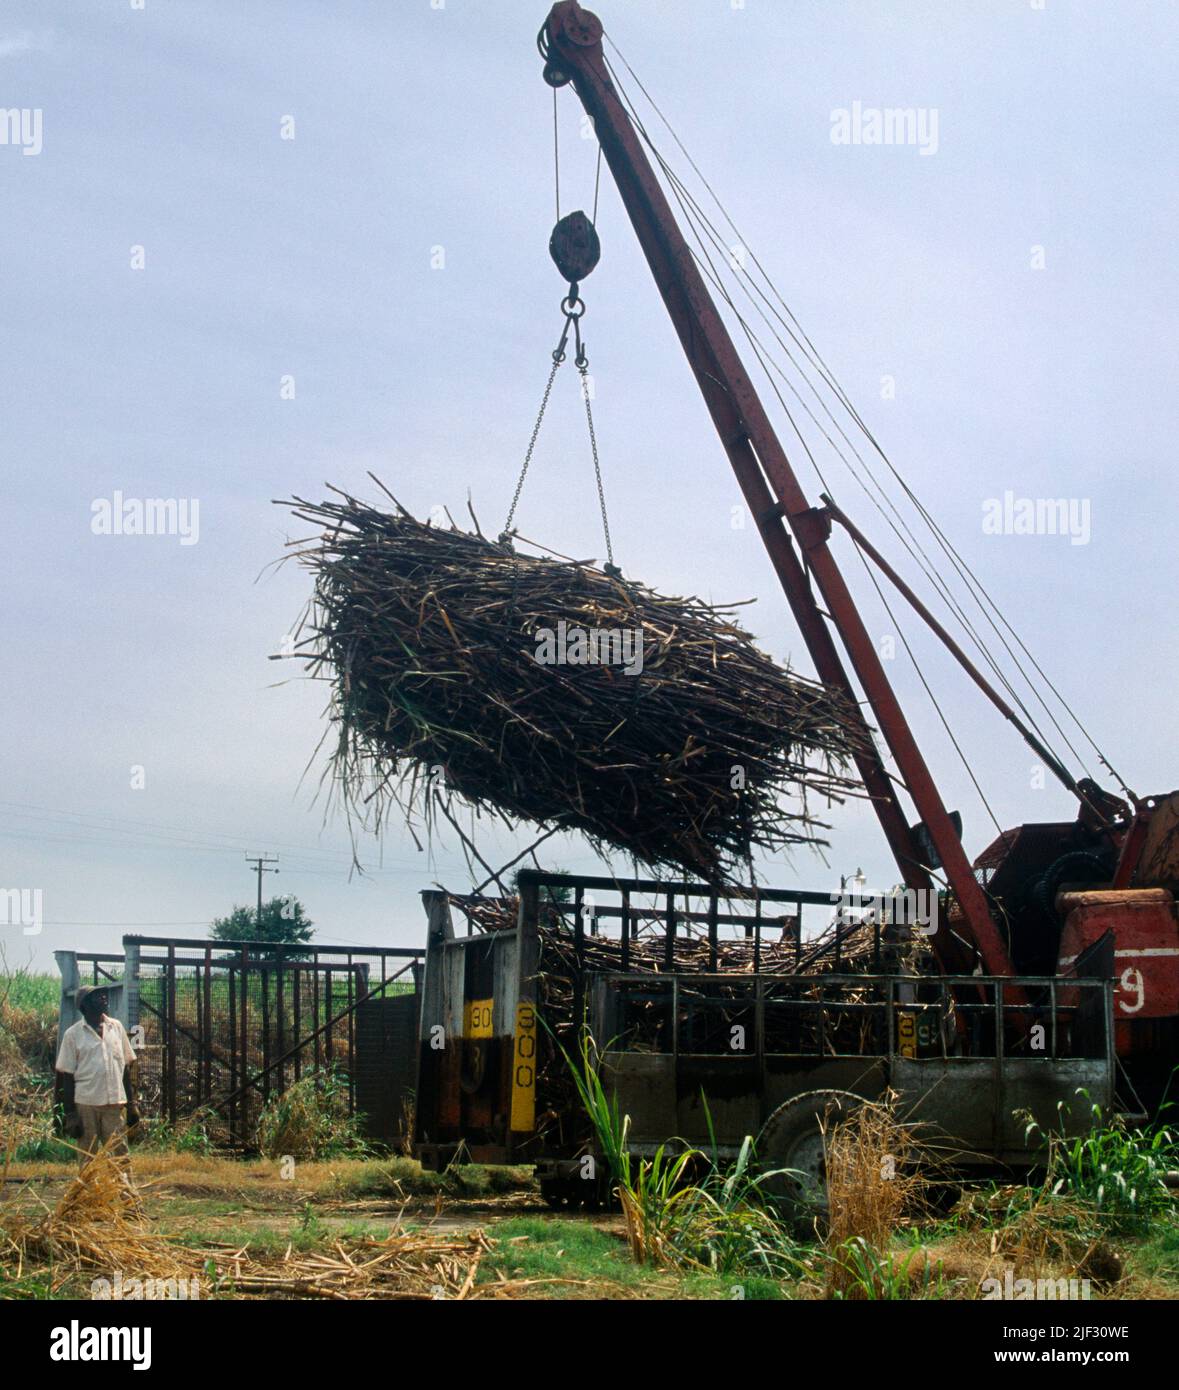 St Kitts Crane hoisting Sugarcane on to Trailer after Harvest Stock Photo